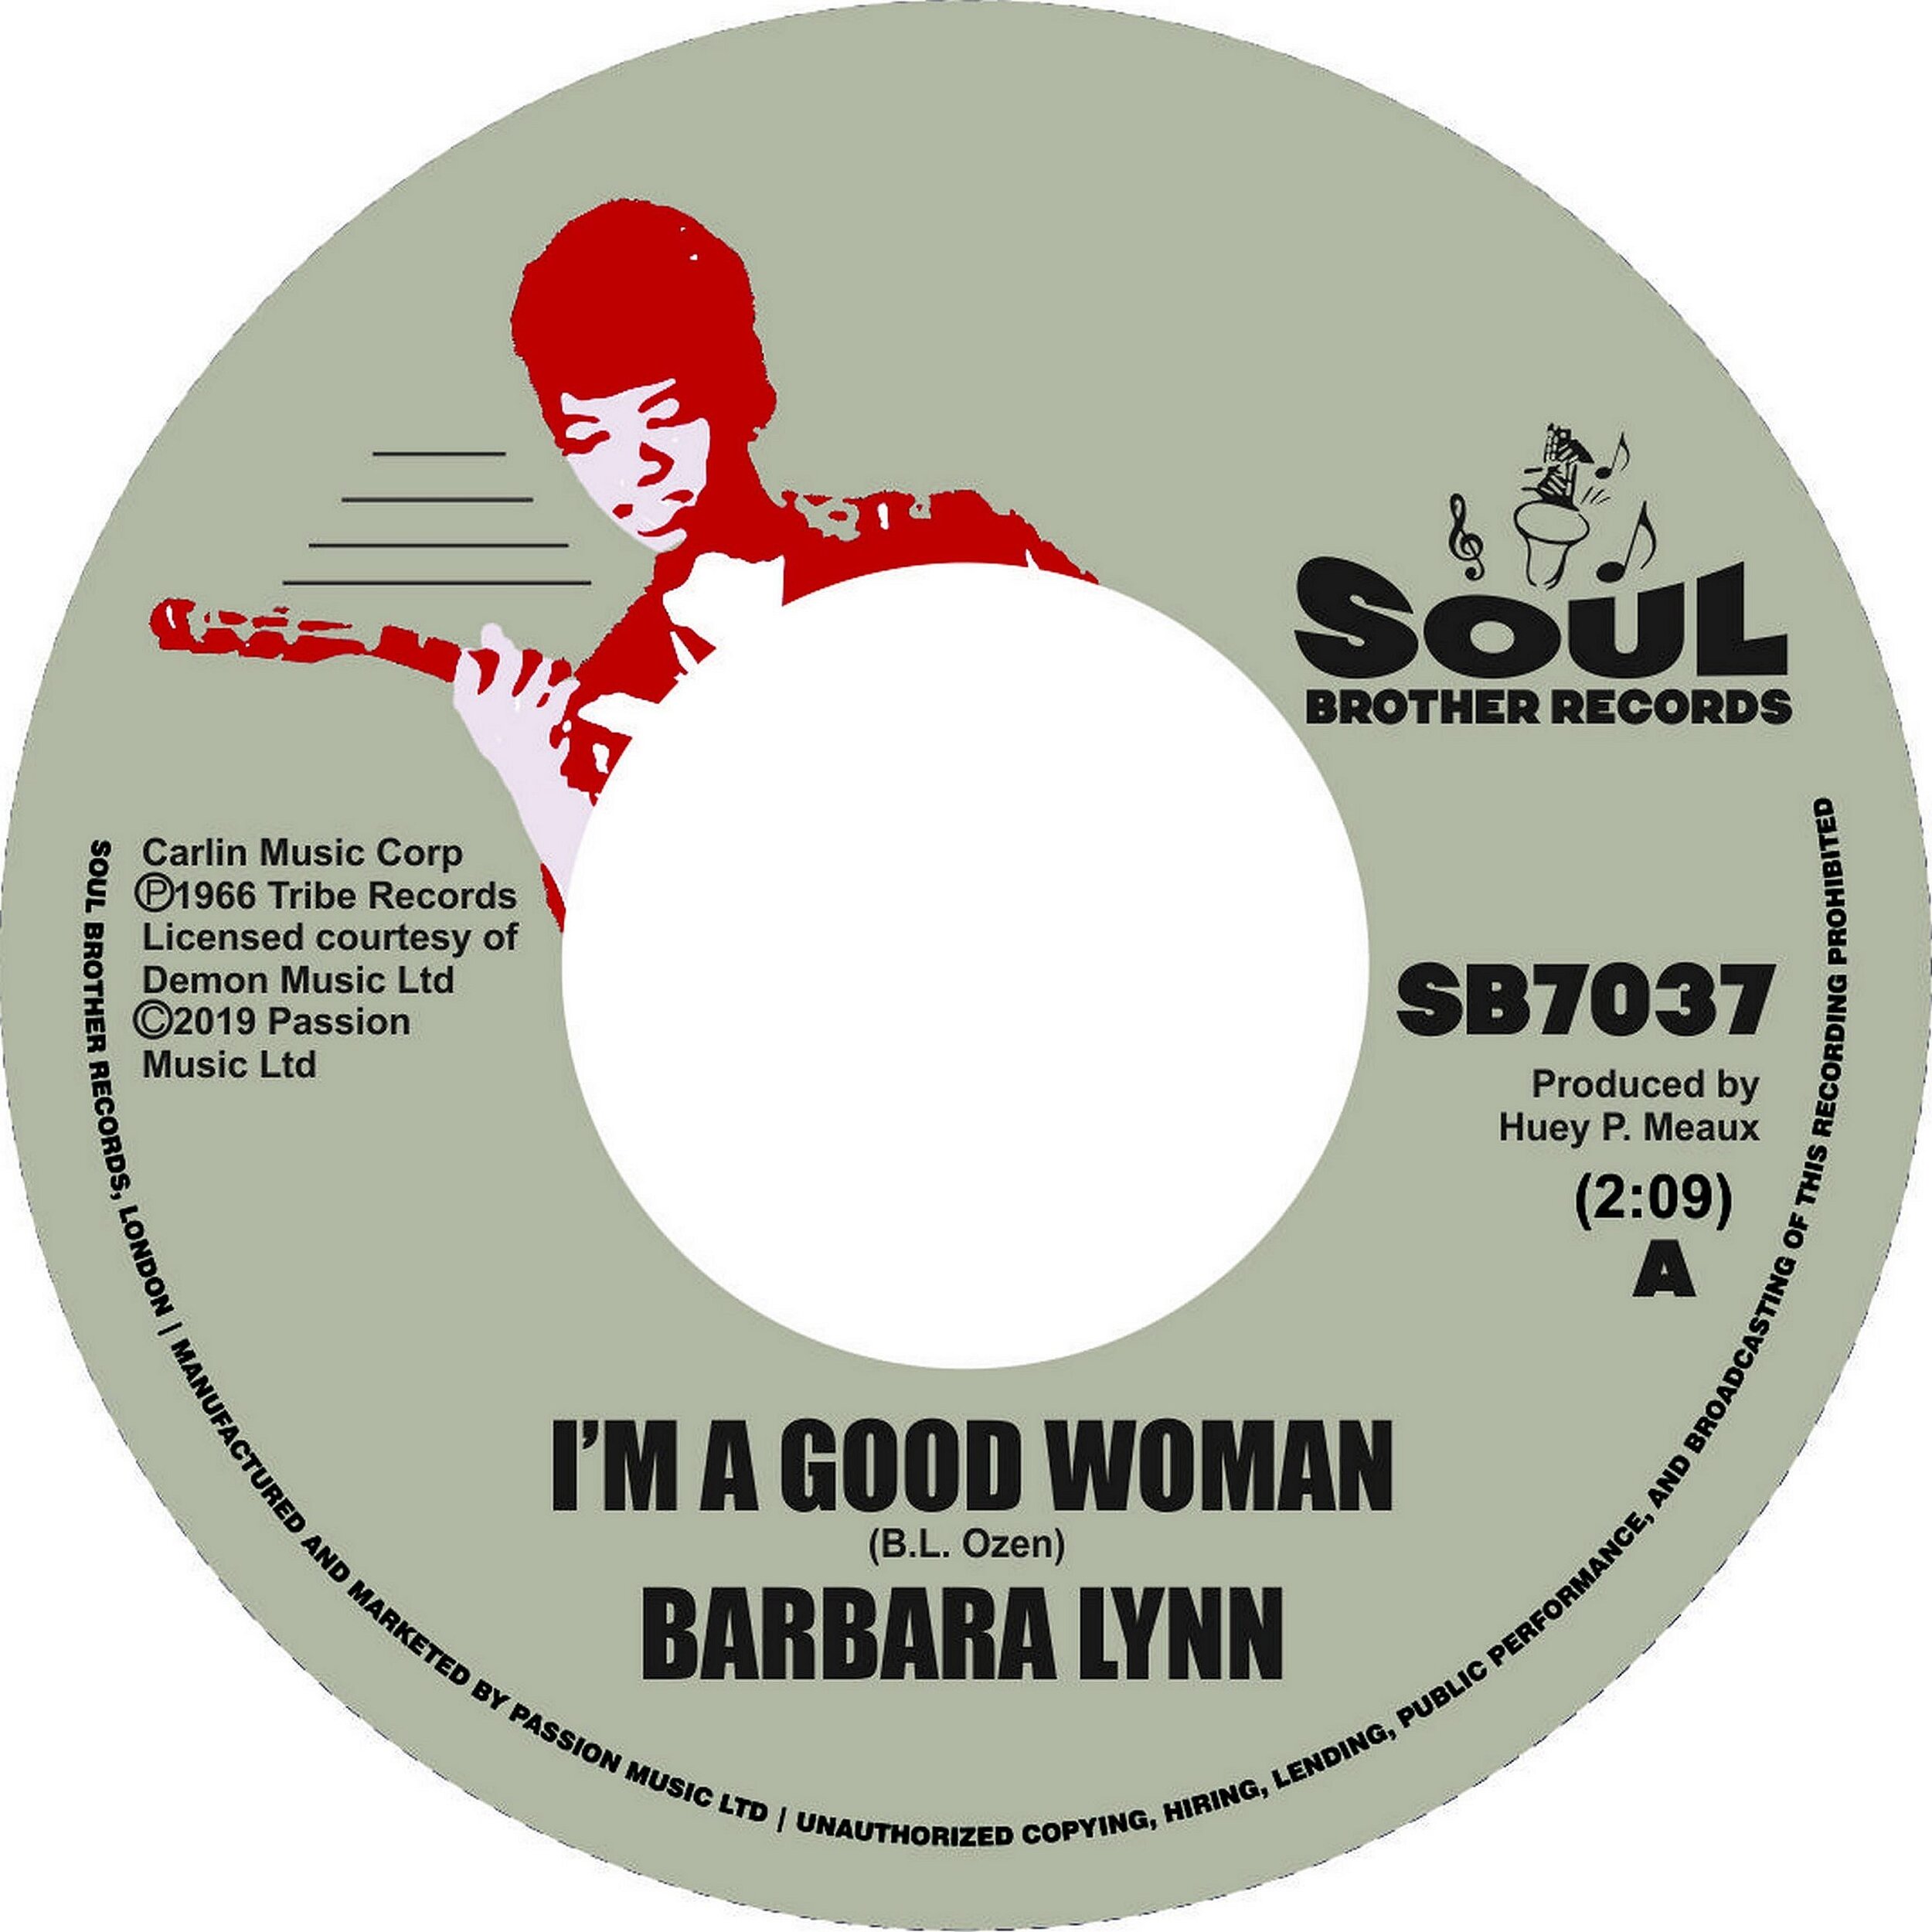 Brother records. Барбара Линн. Барбара песня. Фирма Soul. Песня Барбара на пластинке.